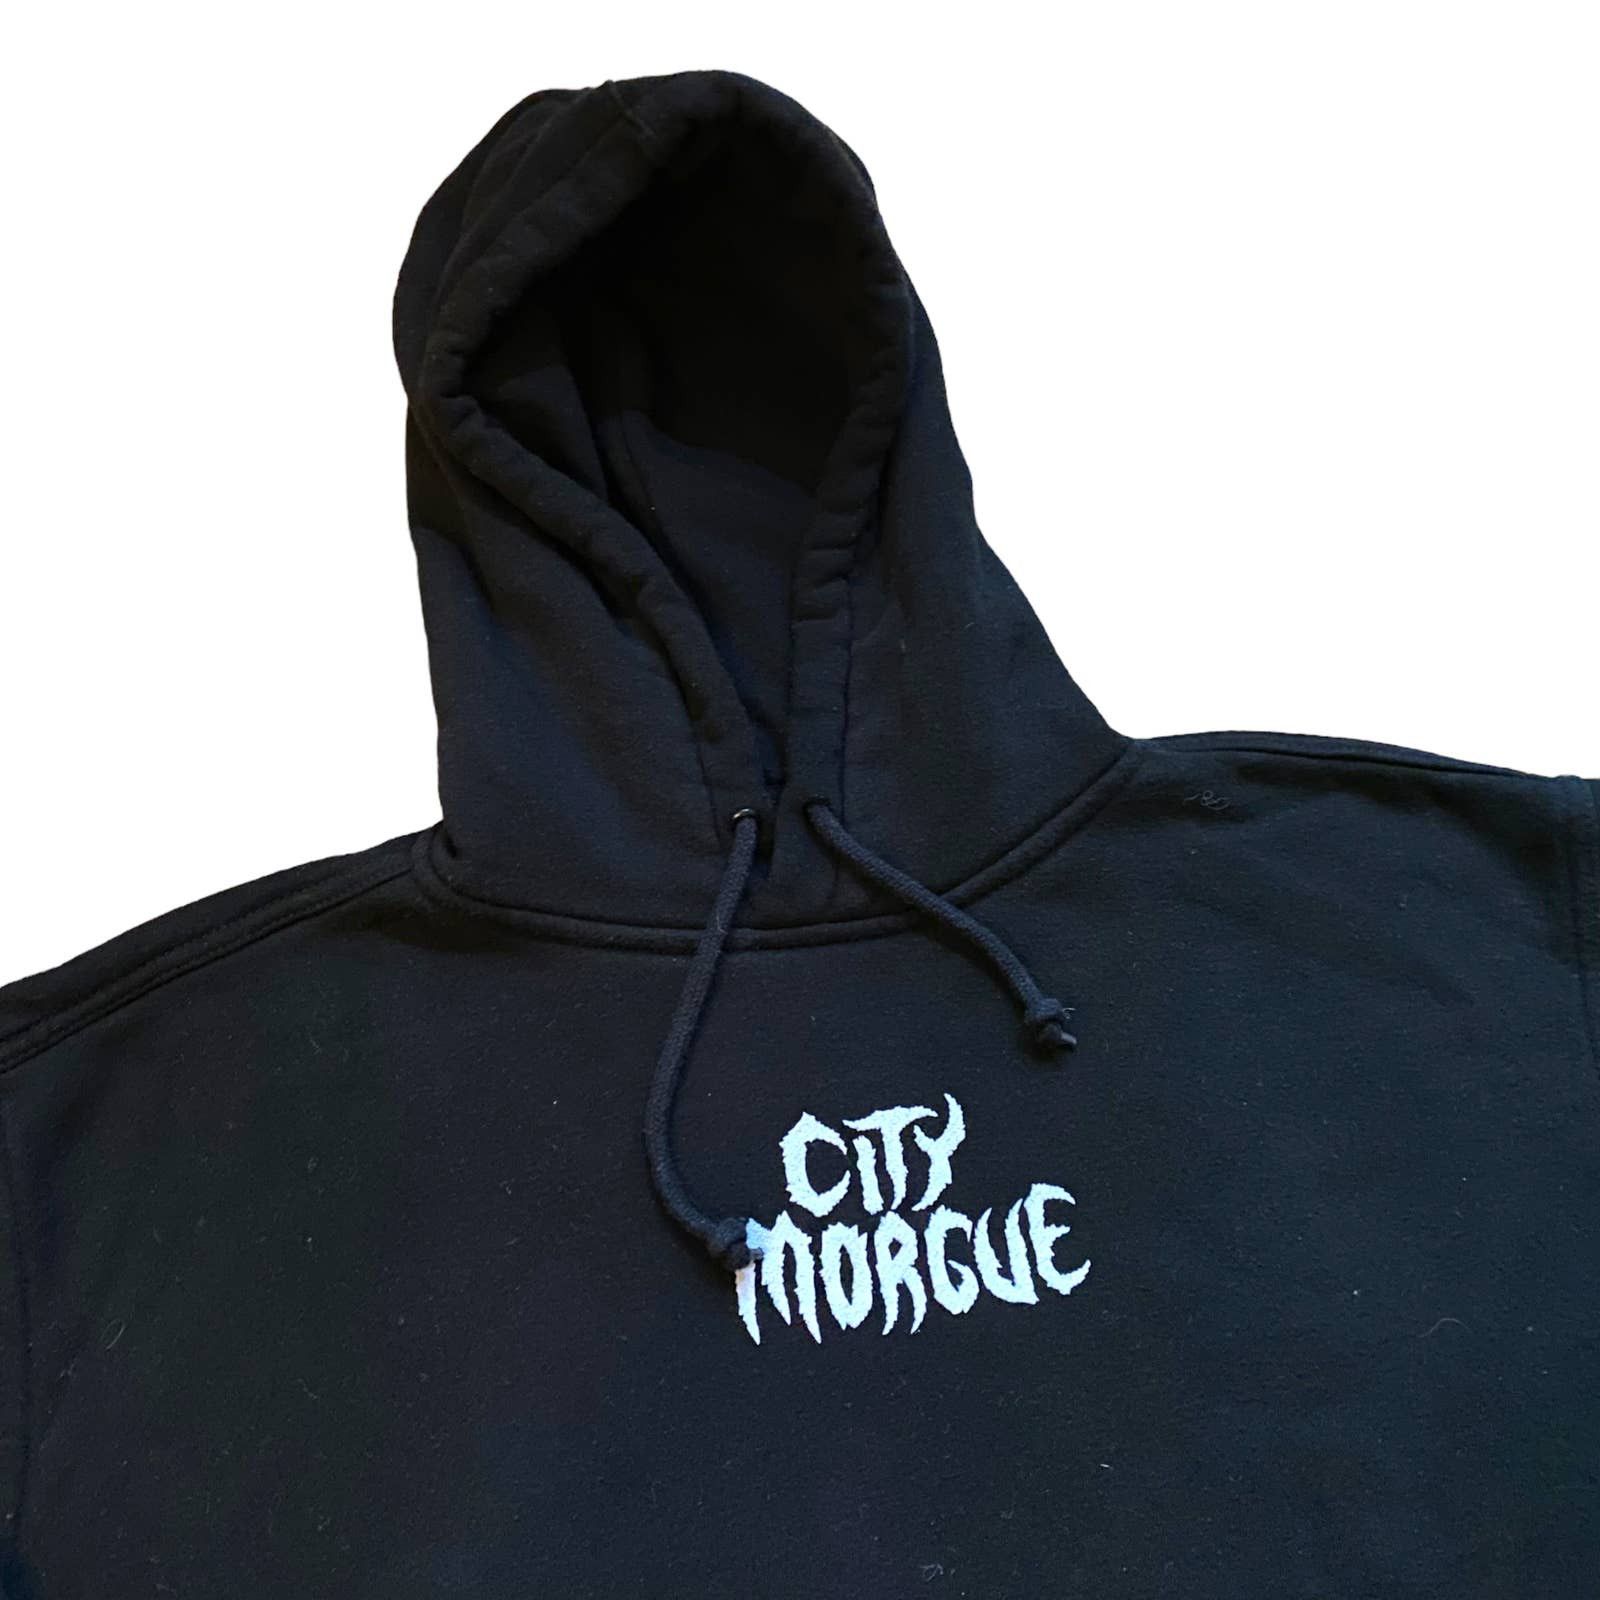 City Morgue City Morgue & Inked x Revolver Limited Edition Pop Up Hoodie Size US M / EU 48-50 / 2 - 2 Preview